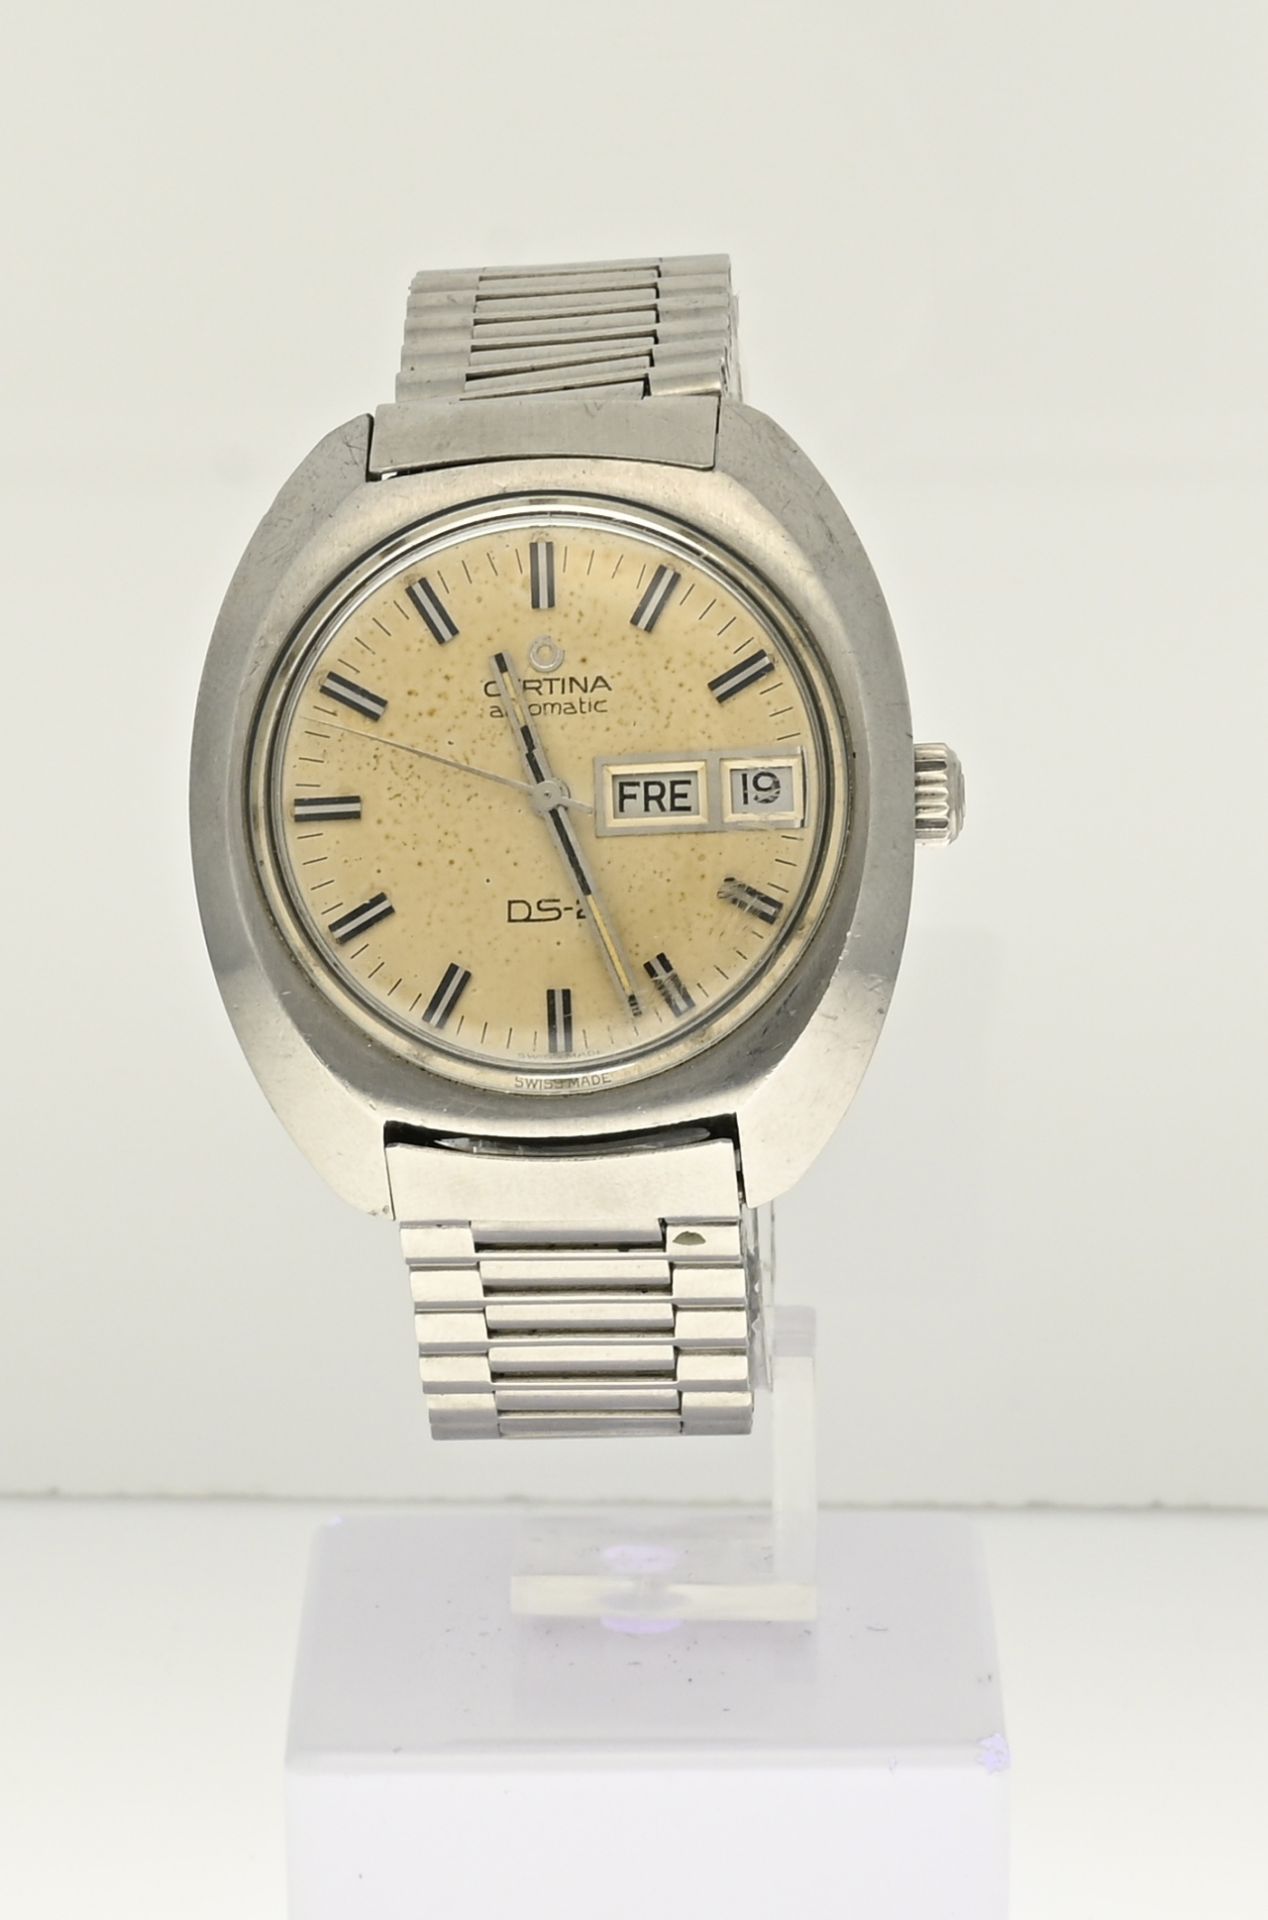 Certina vintage watch